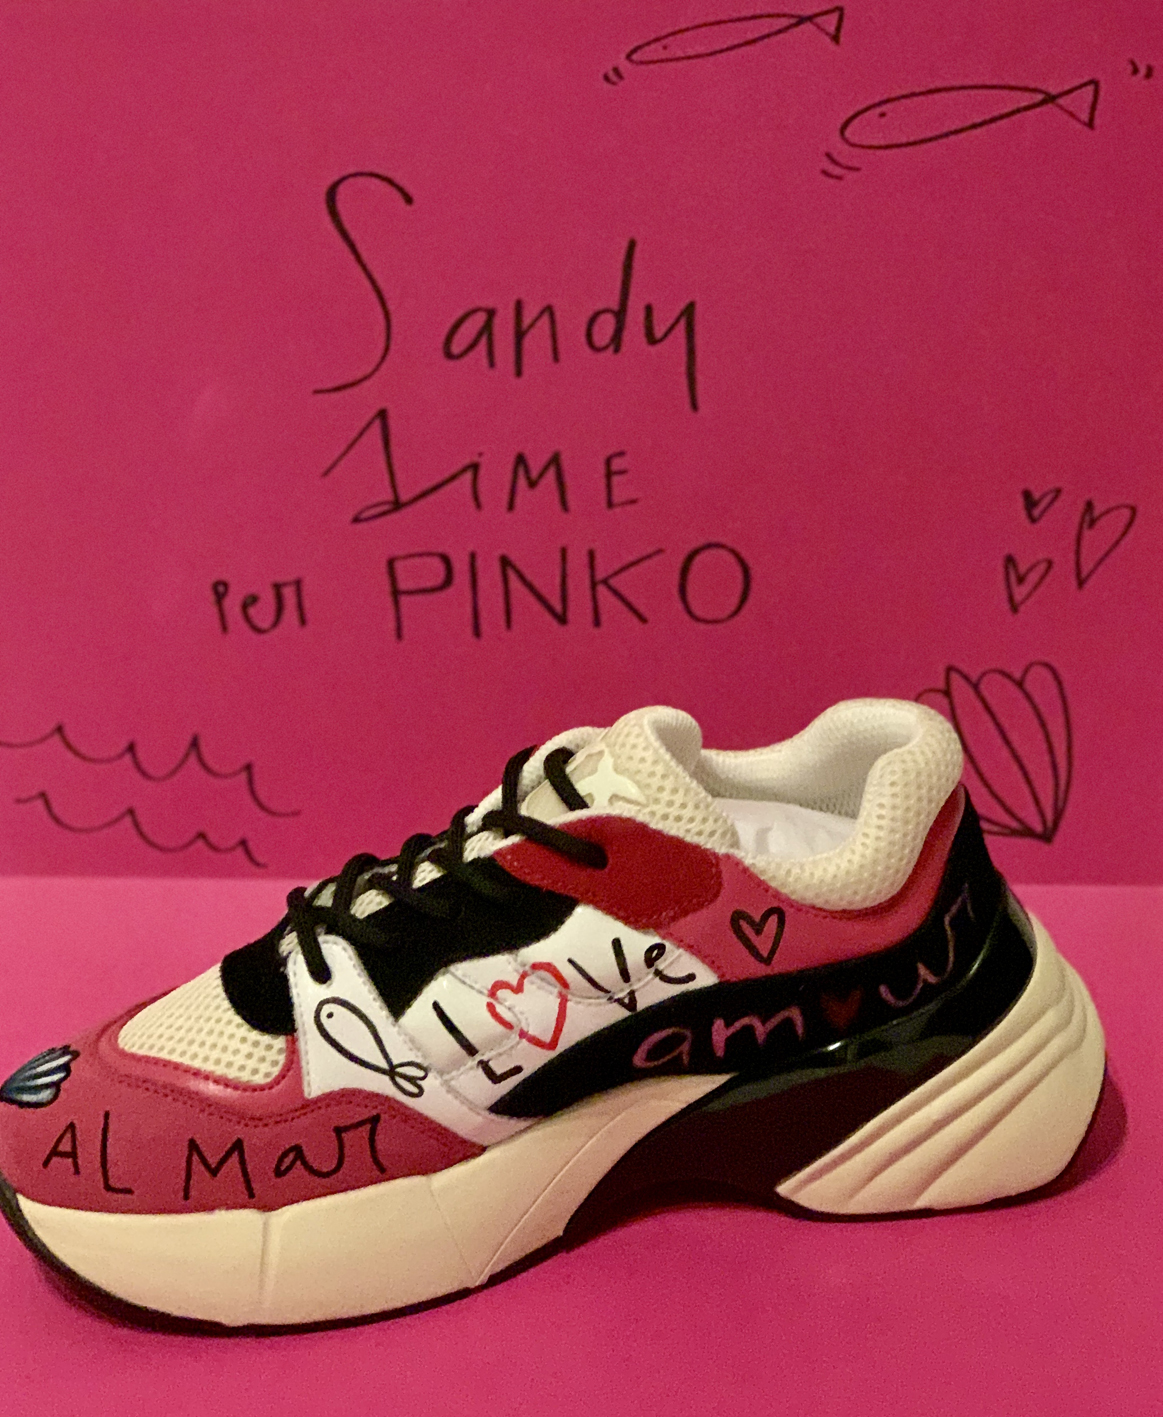 “Sandy-Aime-Pinko-eventi“ 29